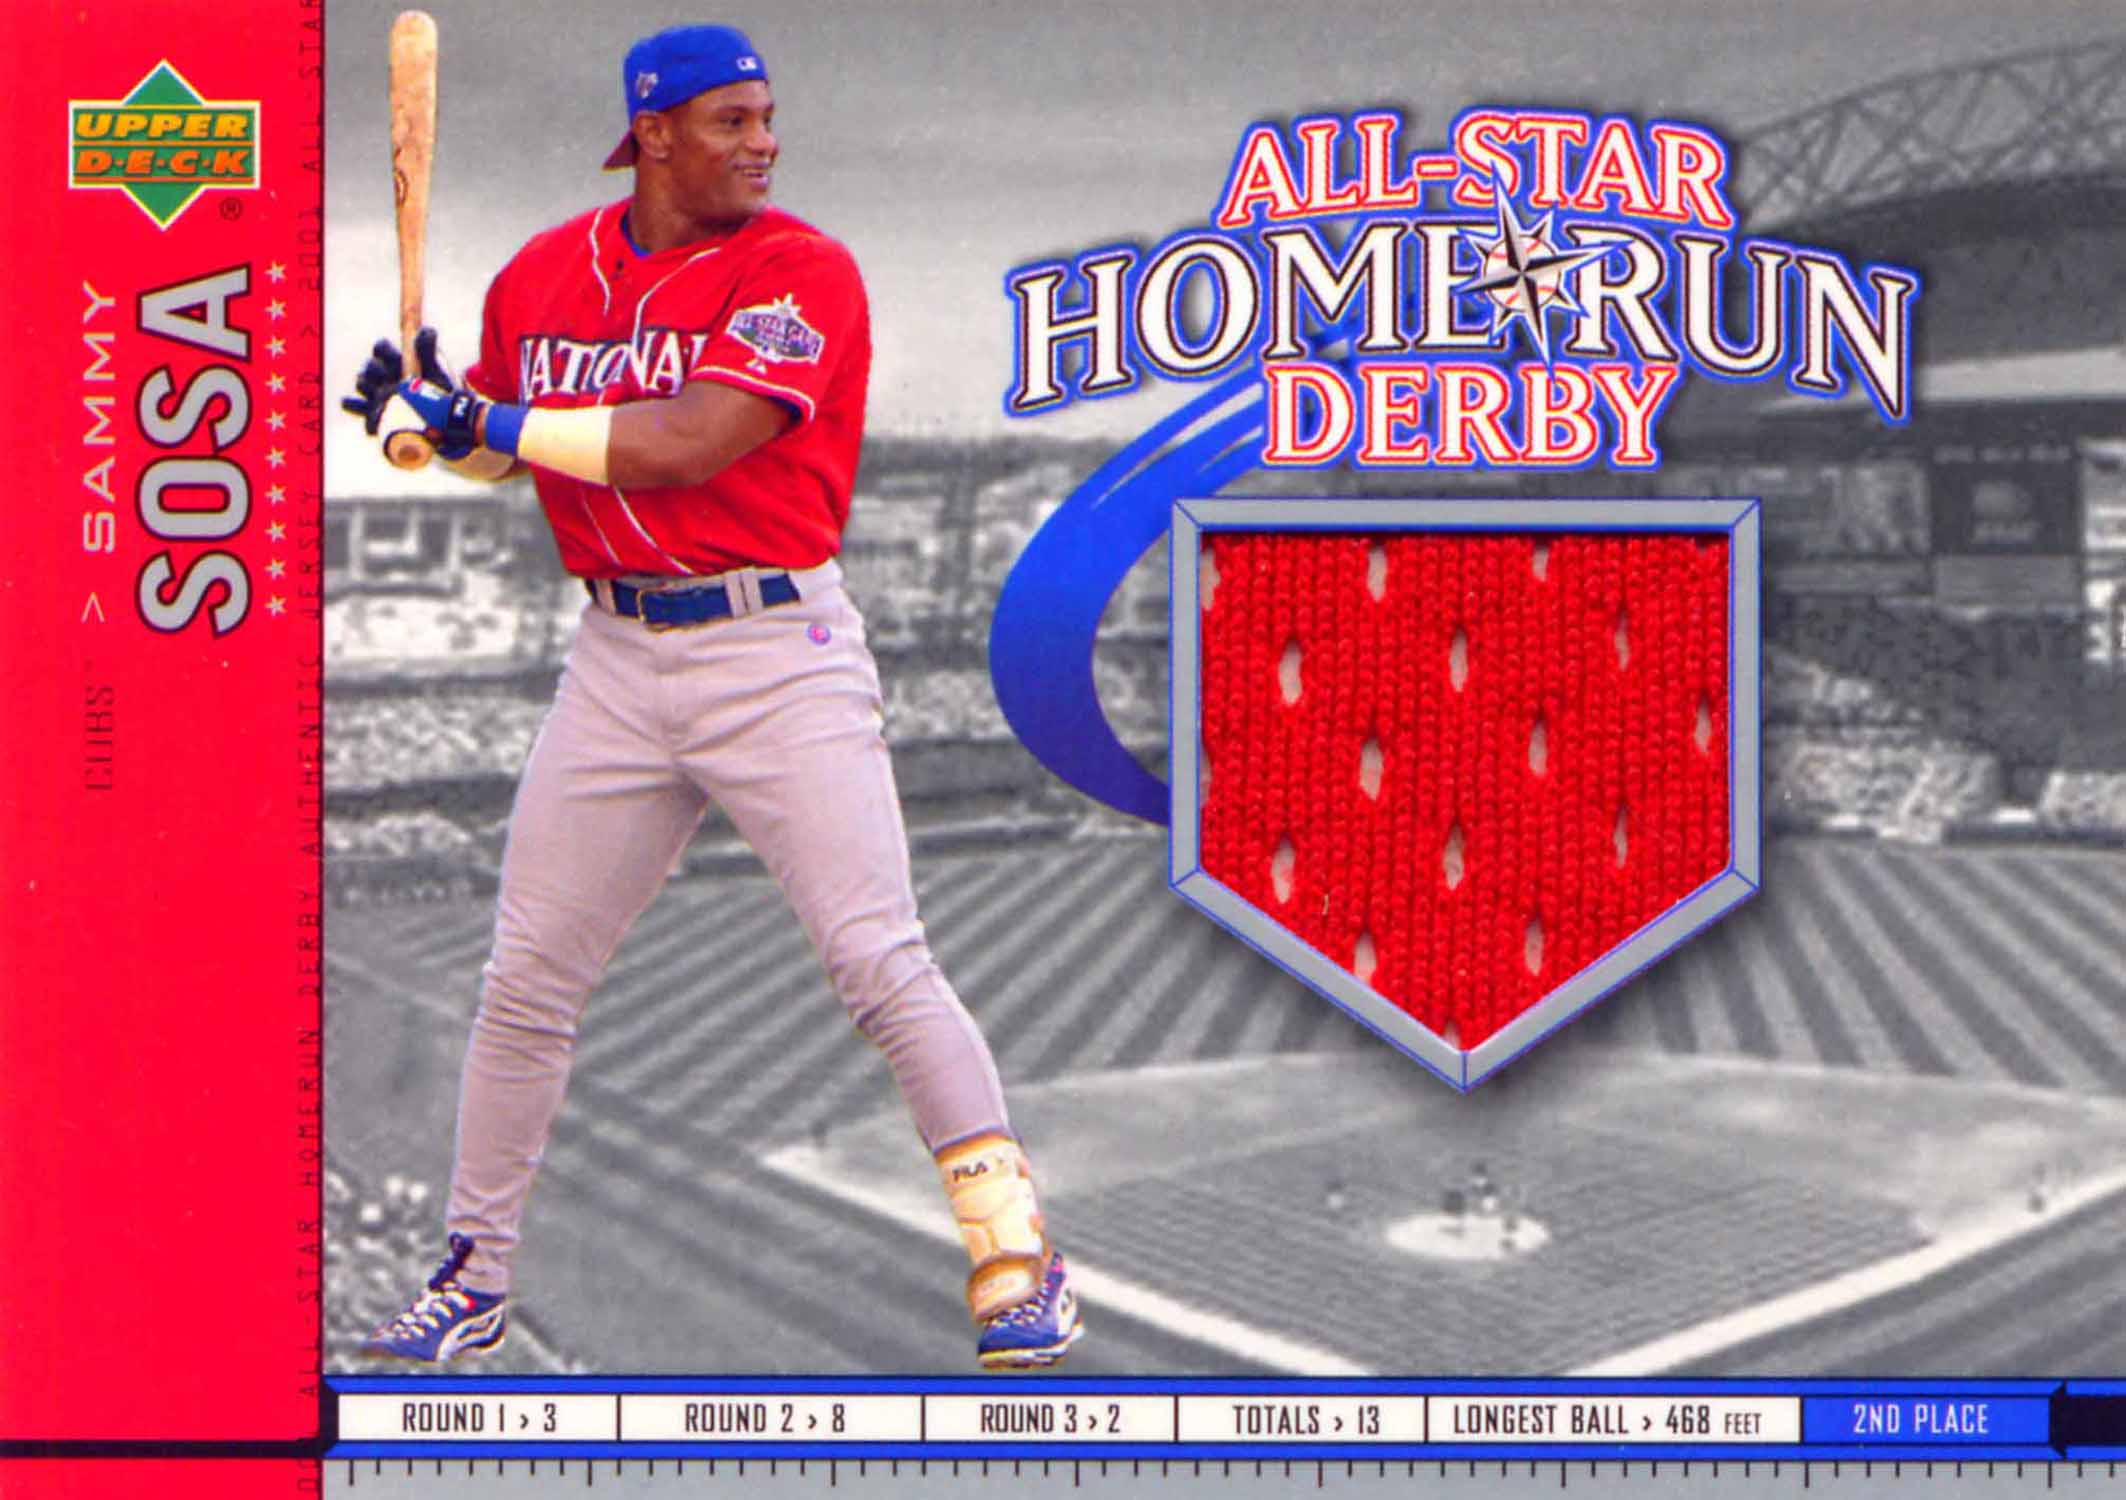 2002 Upper Deck All-Star Home Run Derby Game Jersey